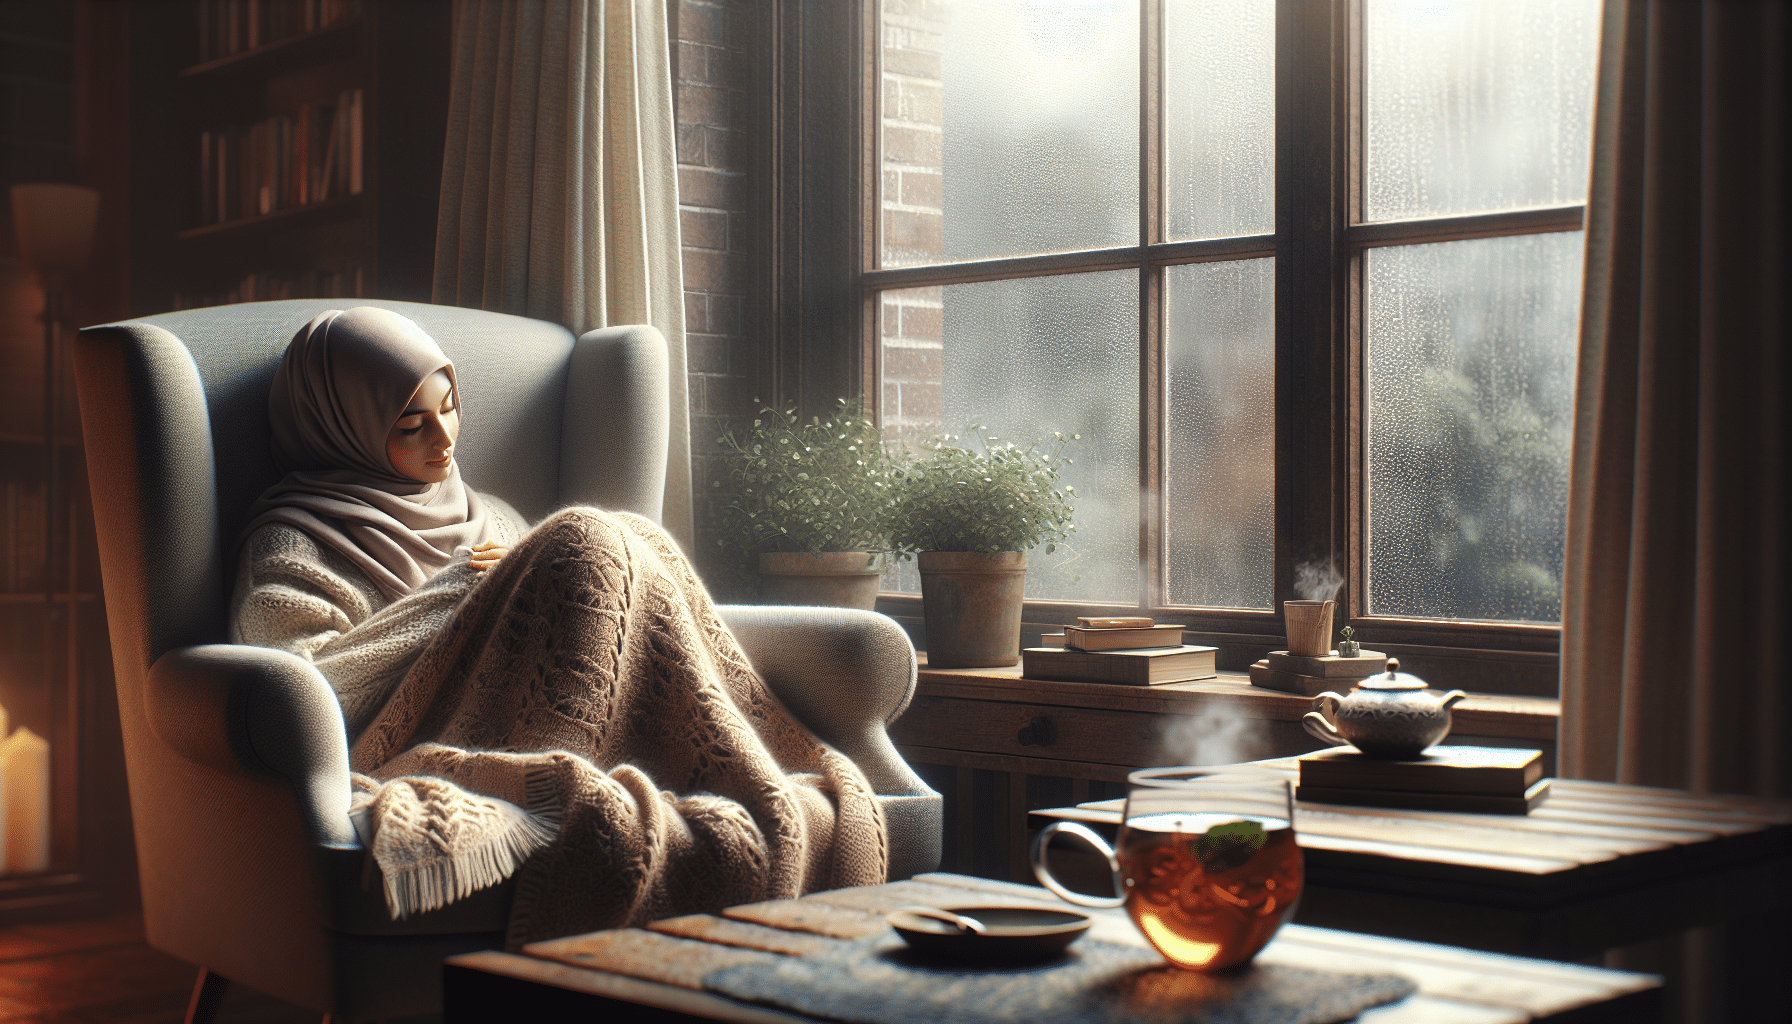 Cozy solitude with tea, books, and rain view